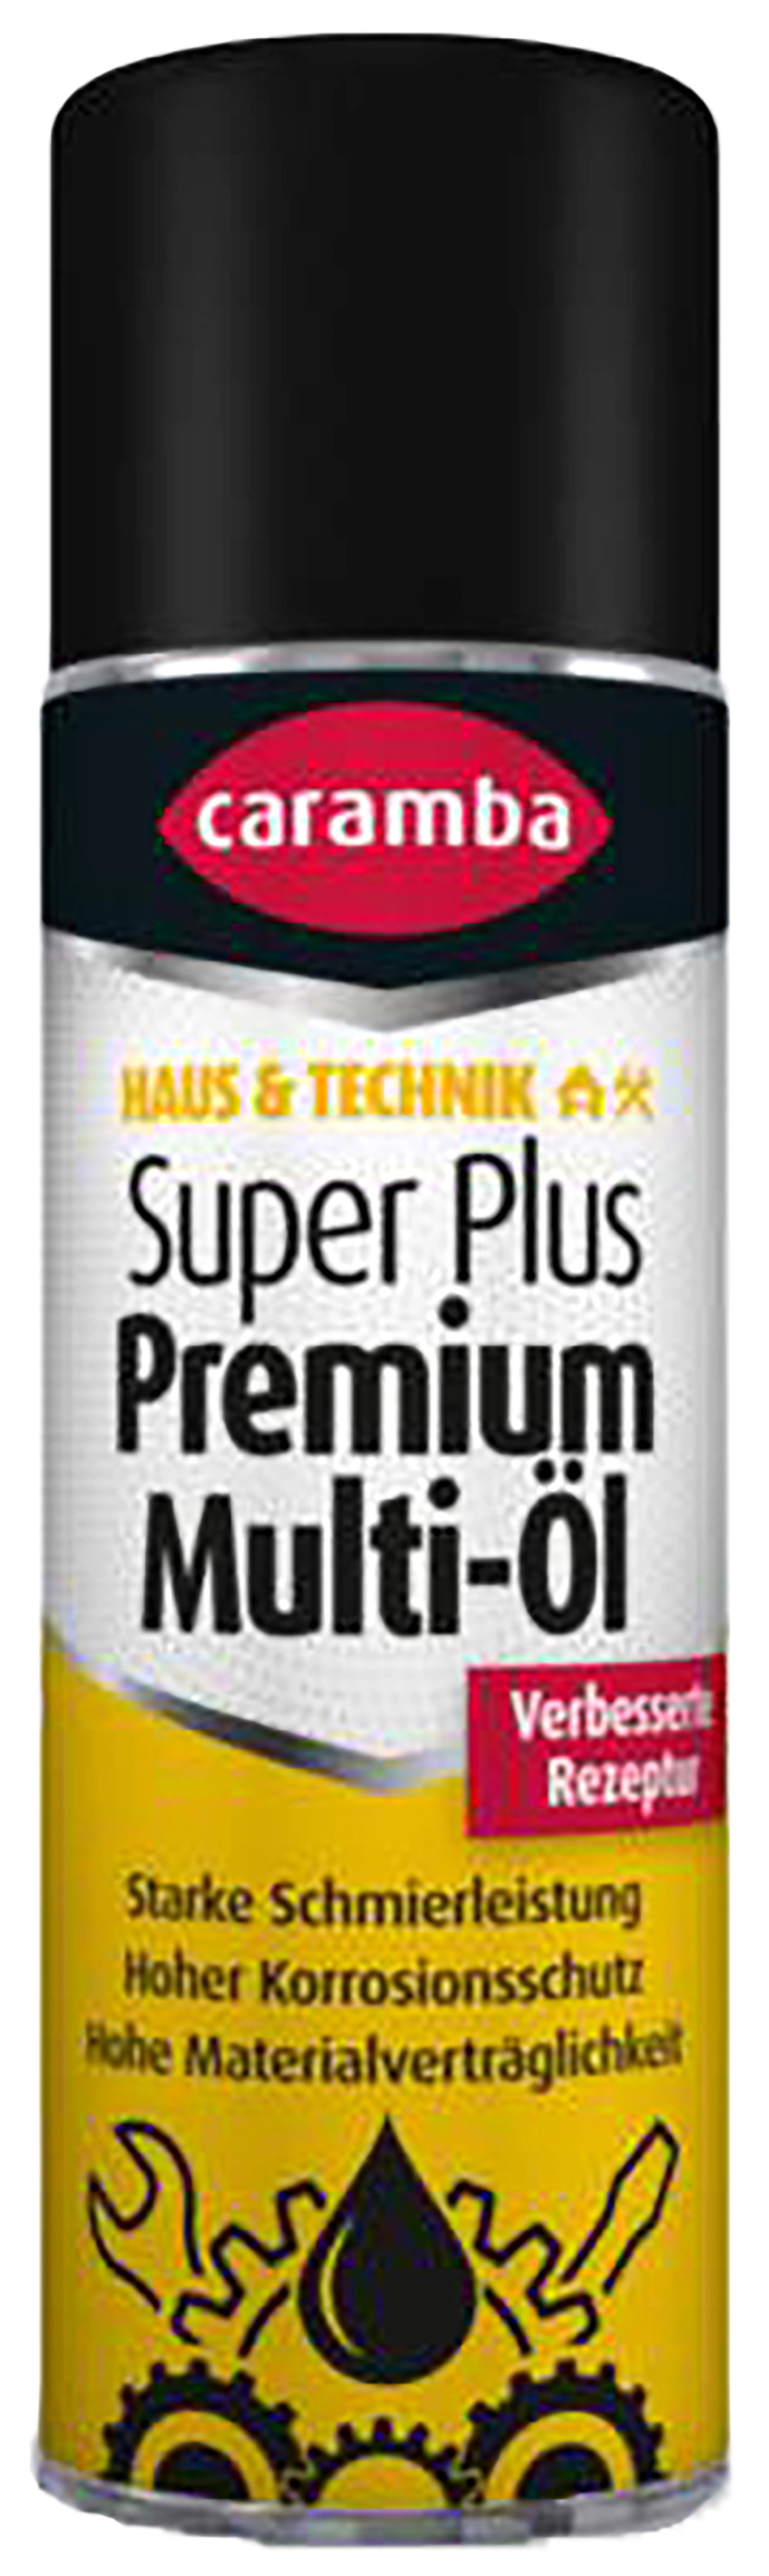 Caramba Super Plus Multi-Spray 300 ml kaufen bei OBI